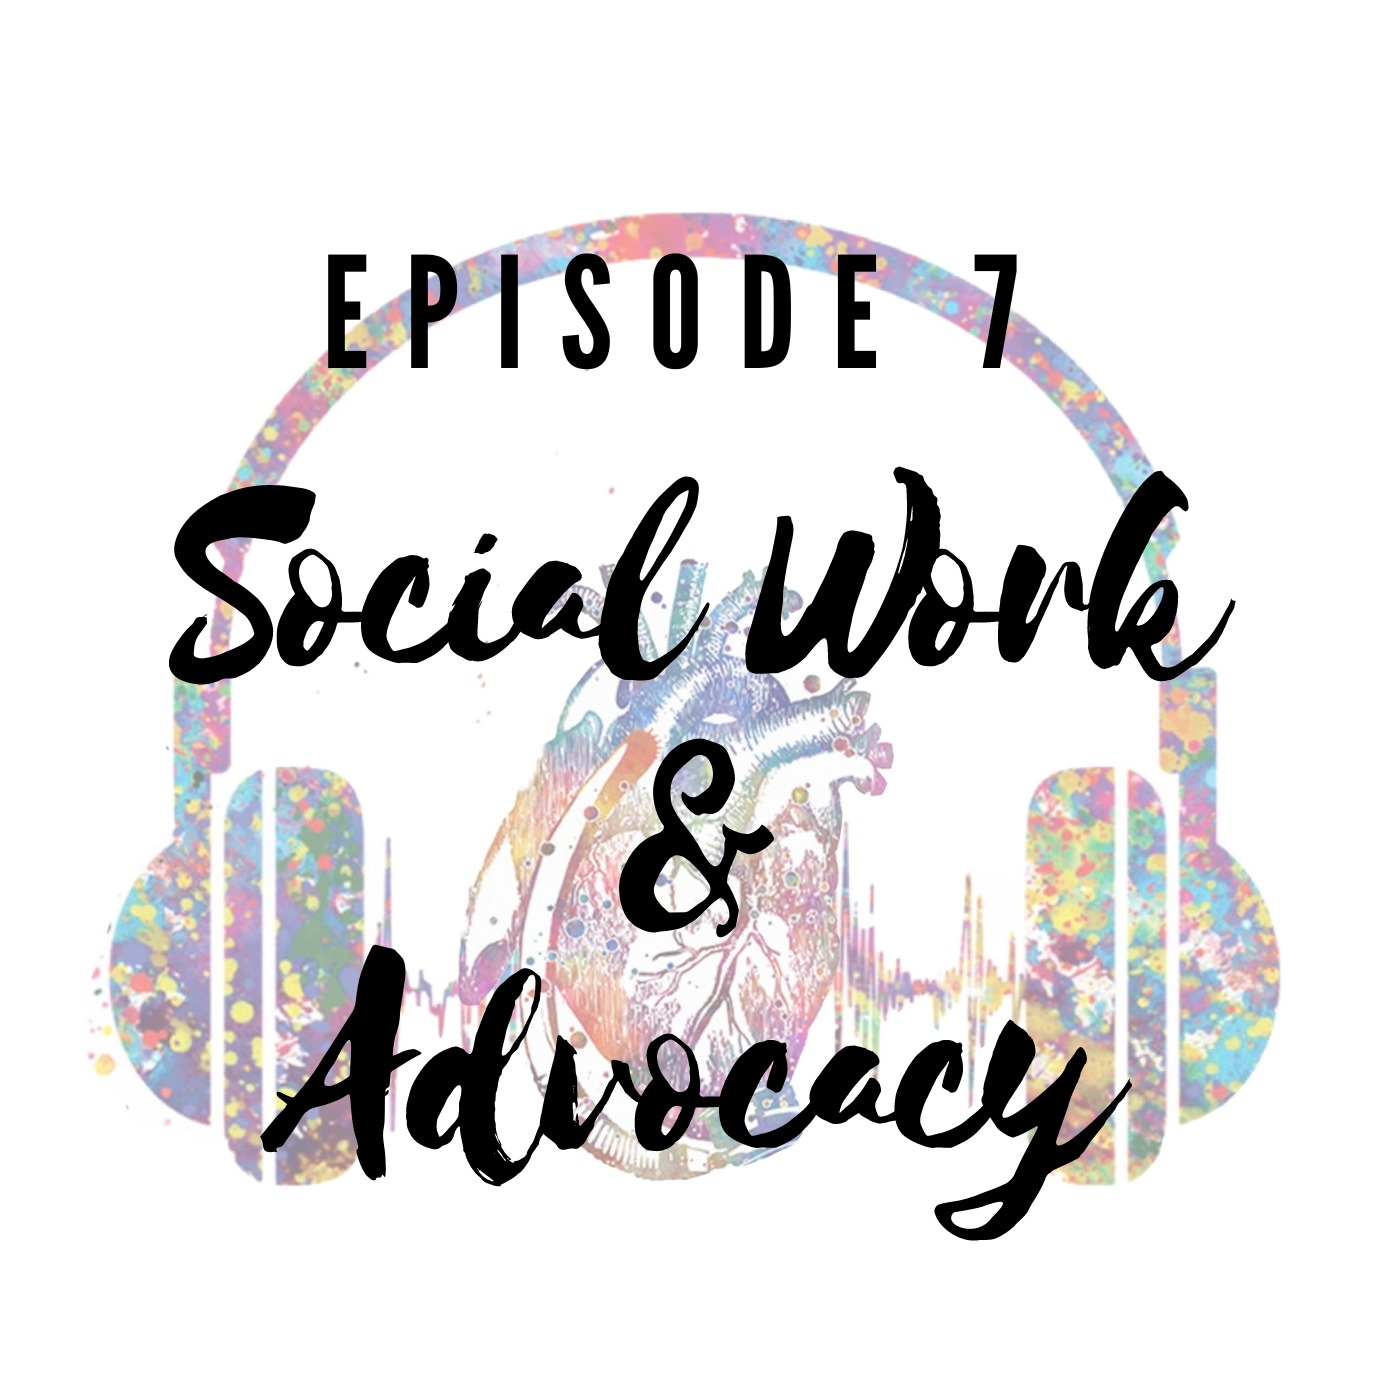 Episode 7: Advocacy